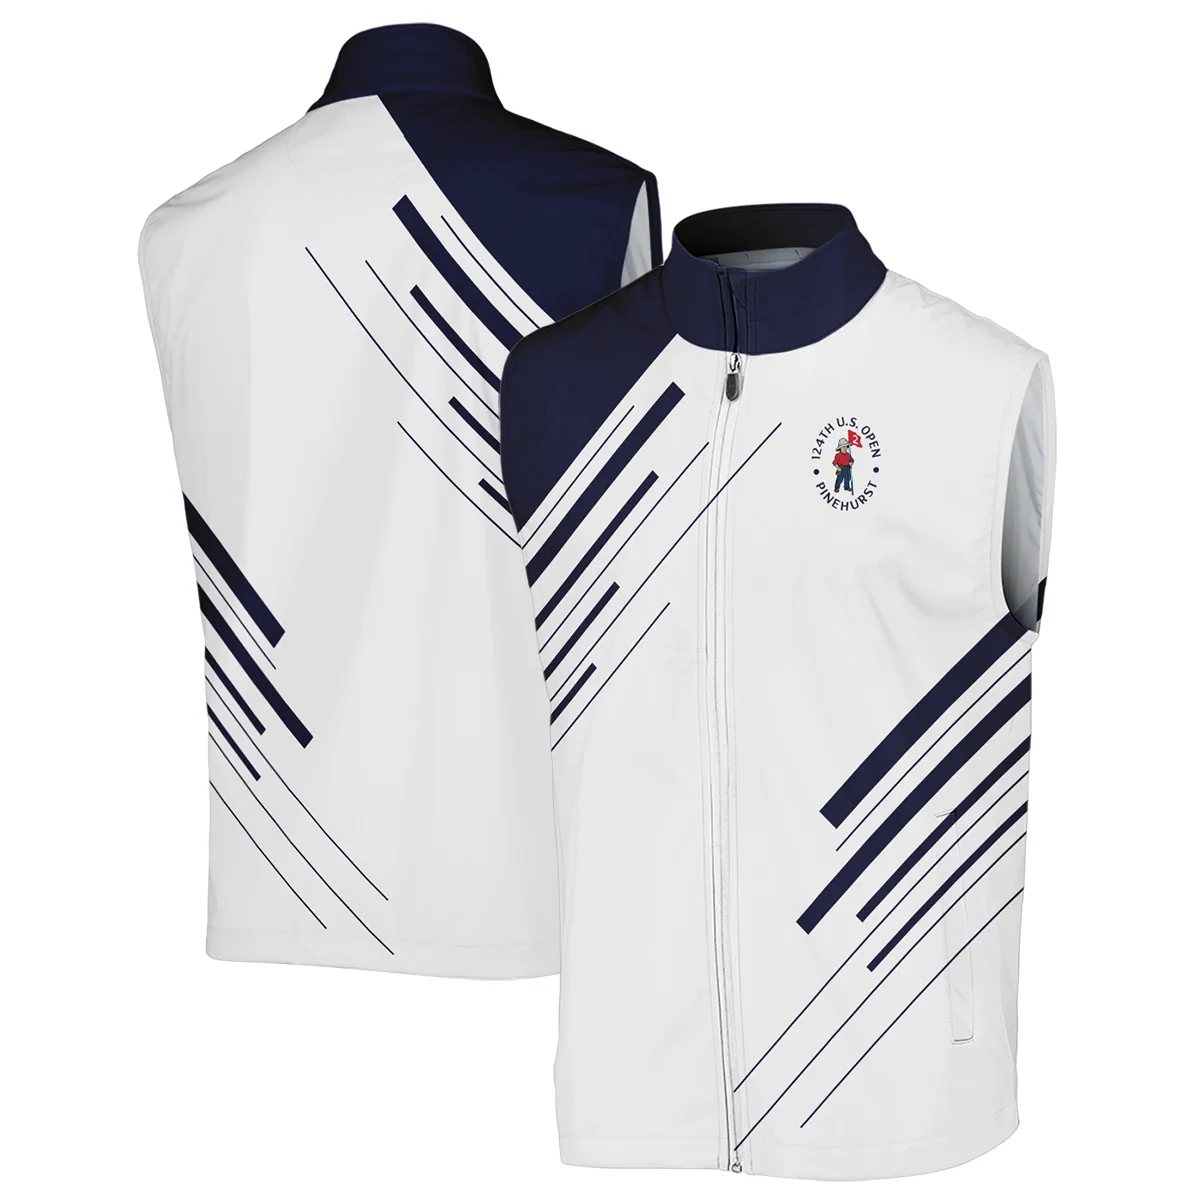 Titleist 124th U.S. Open Pinehurst Golf Polo Shirt Striped Pattern Dark Blue White All Over Print Polo Shirt For Men